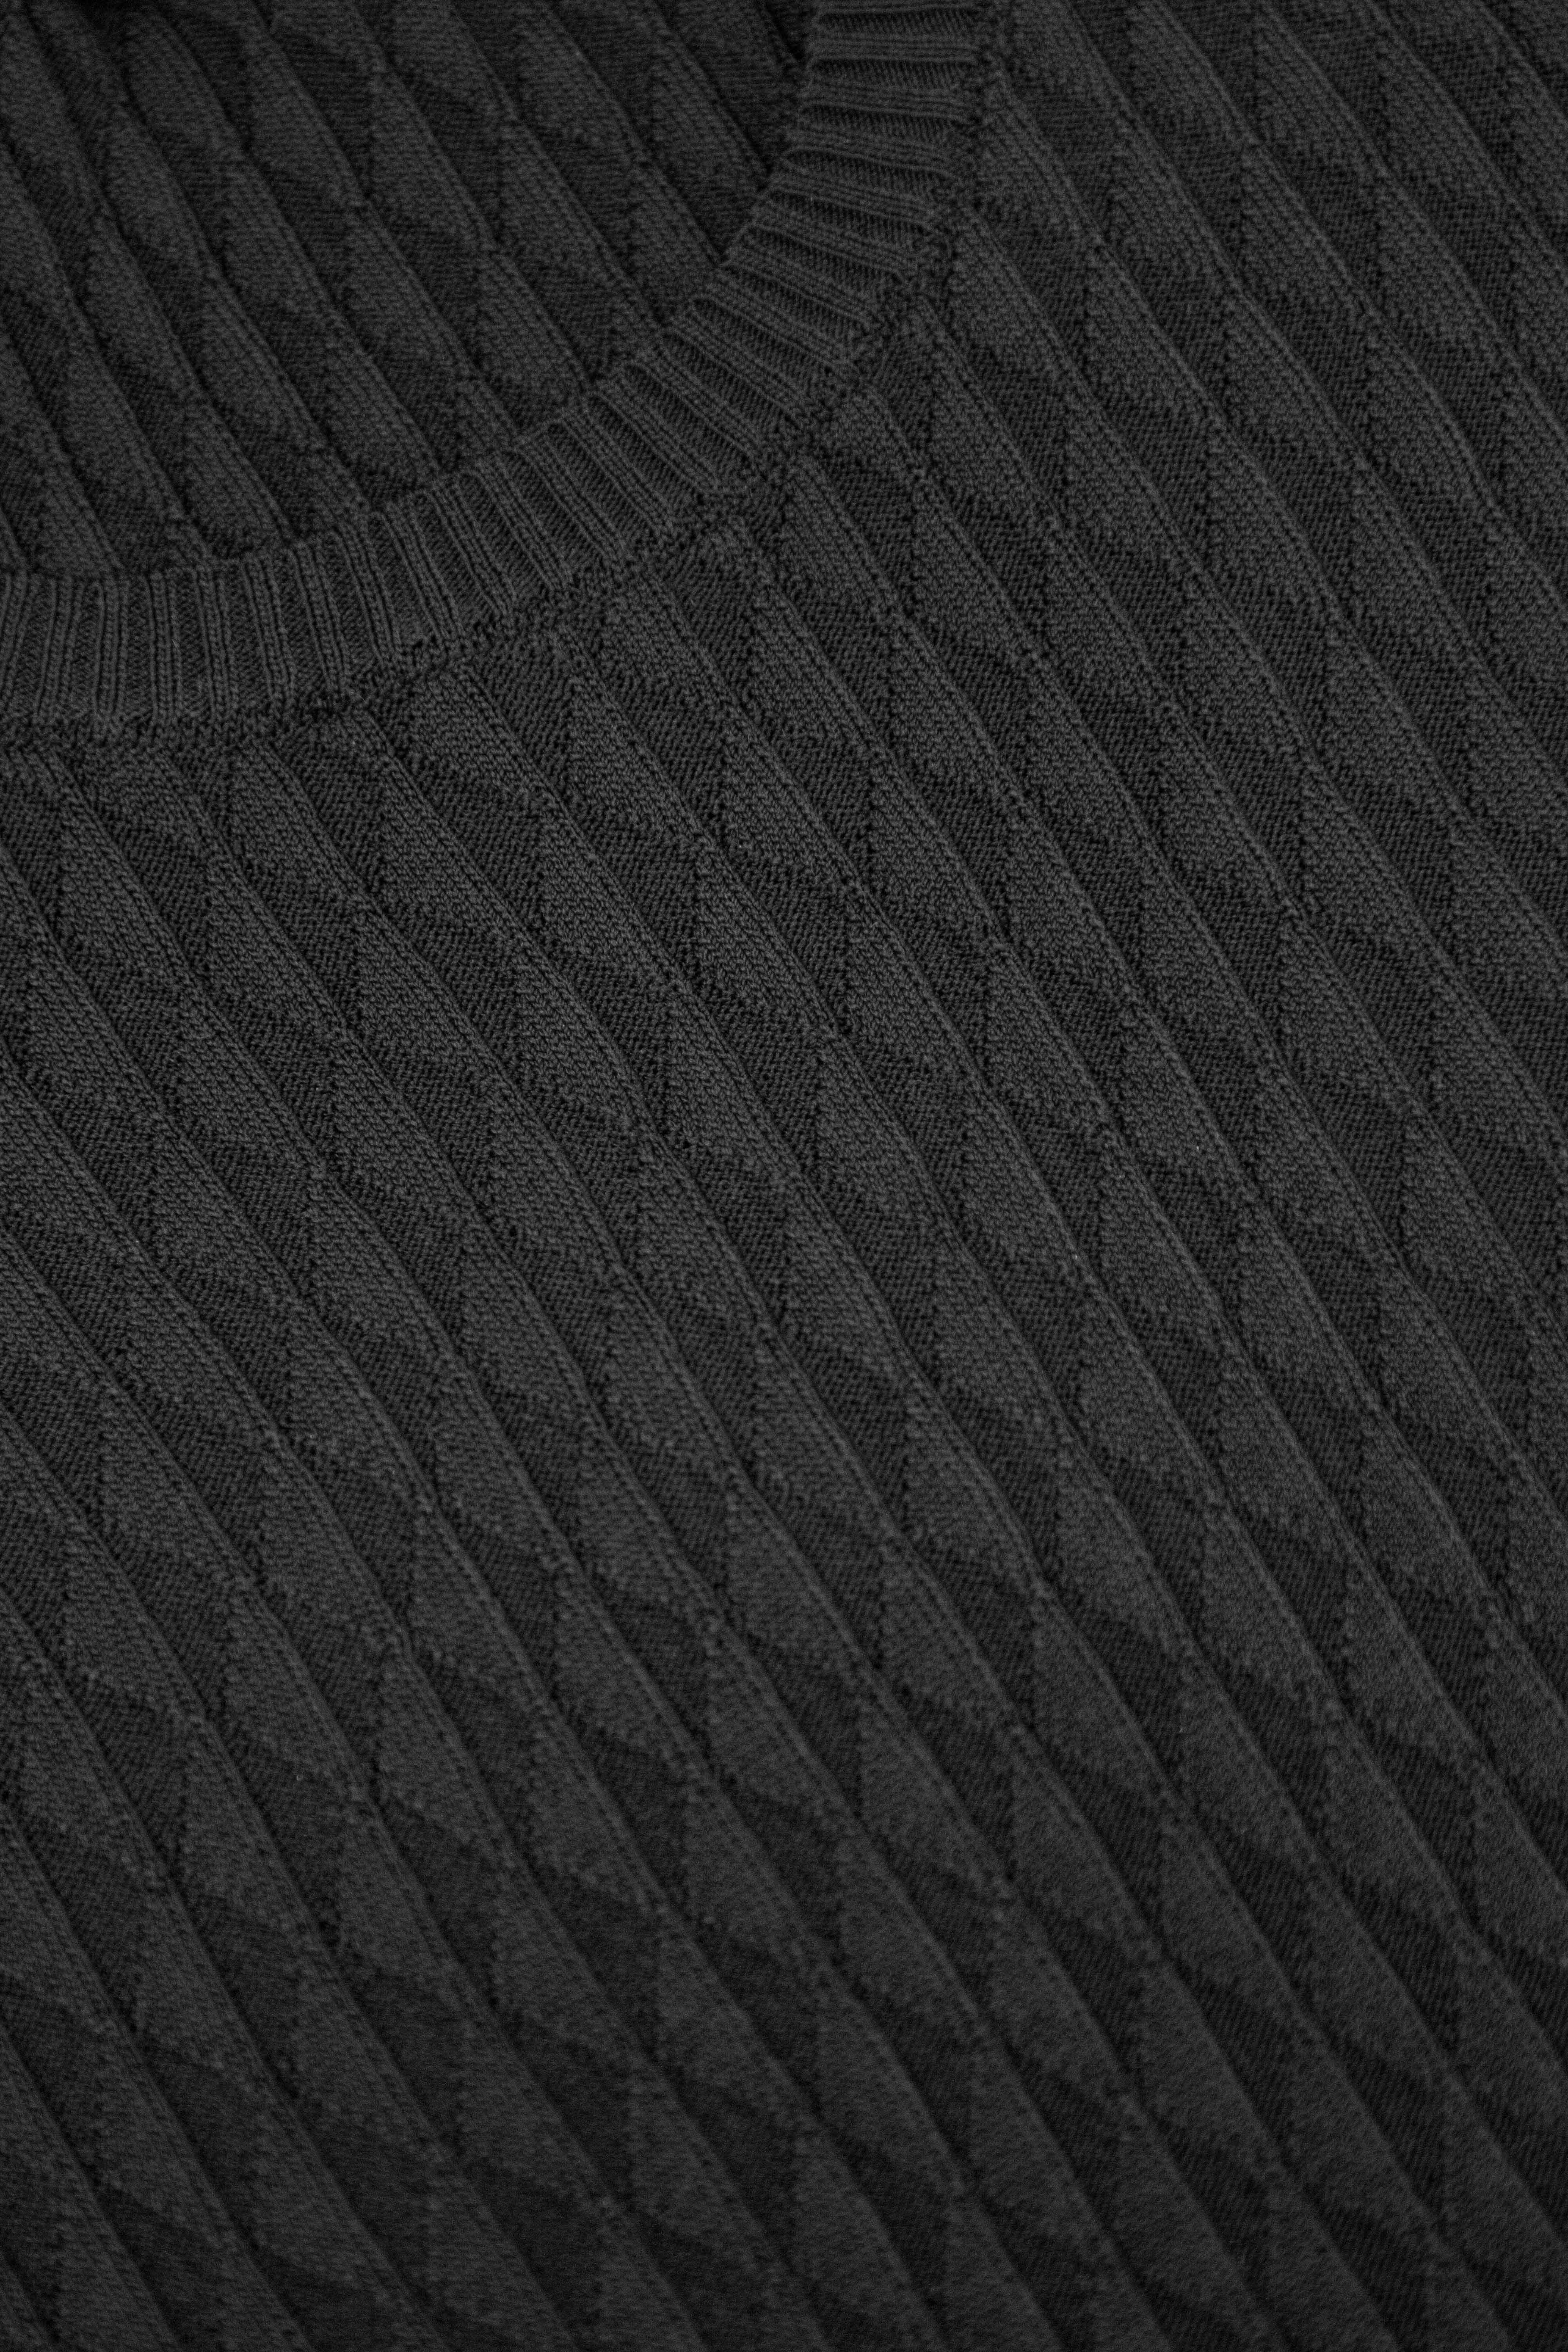 T-shirt 3935-01 Black from BRUSNiKA